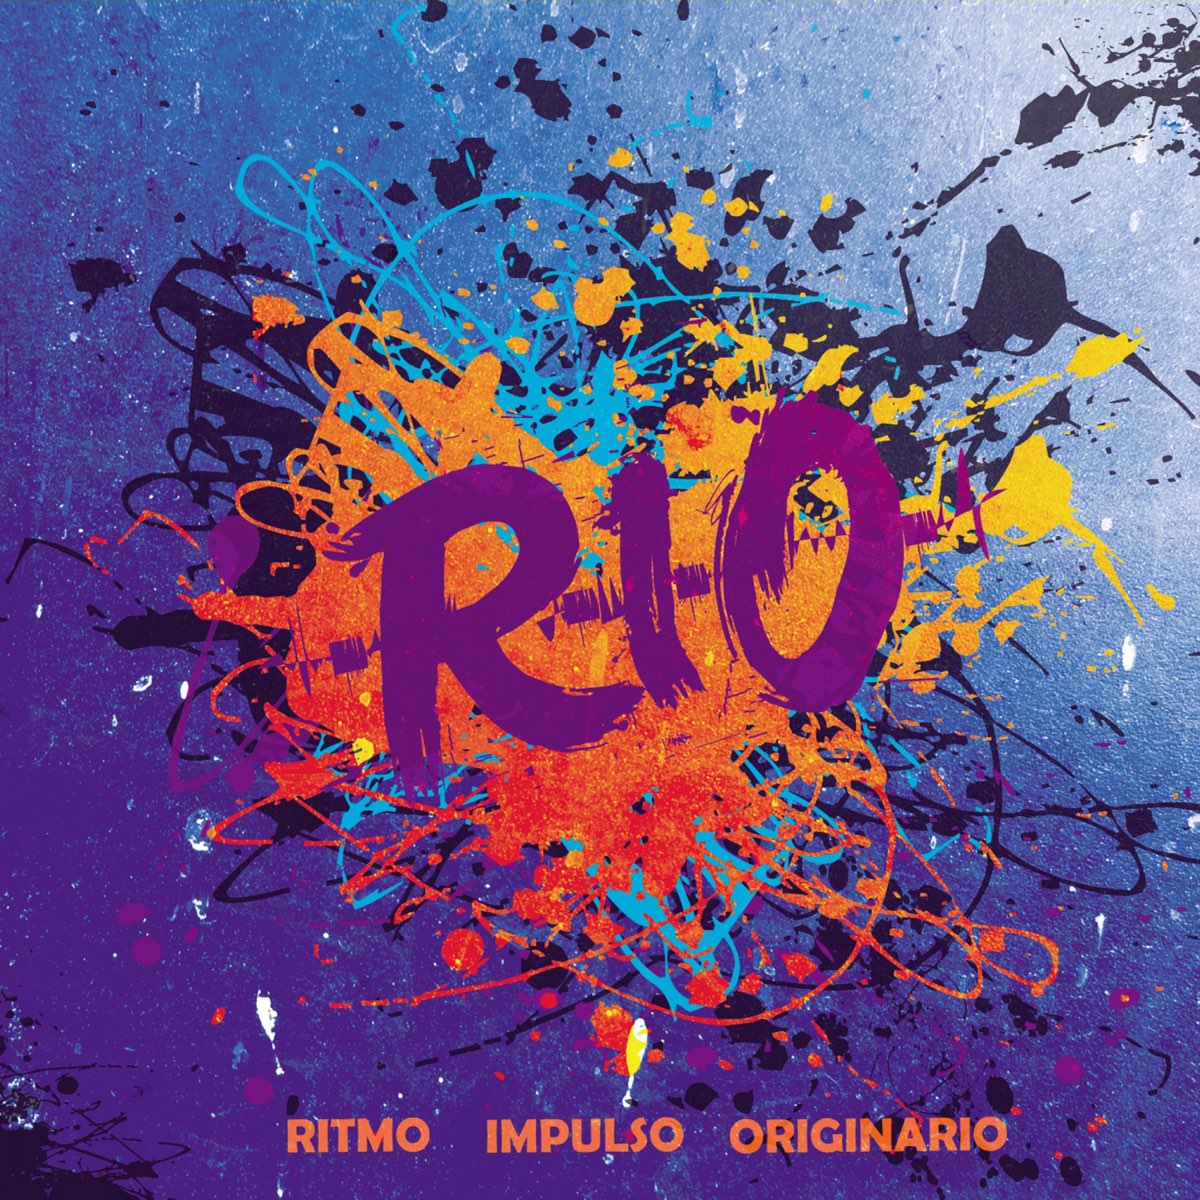 Rio музыка. Картинки ritmo песни.